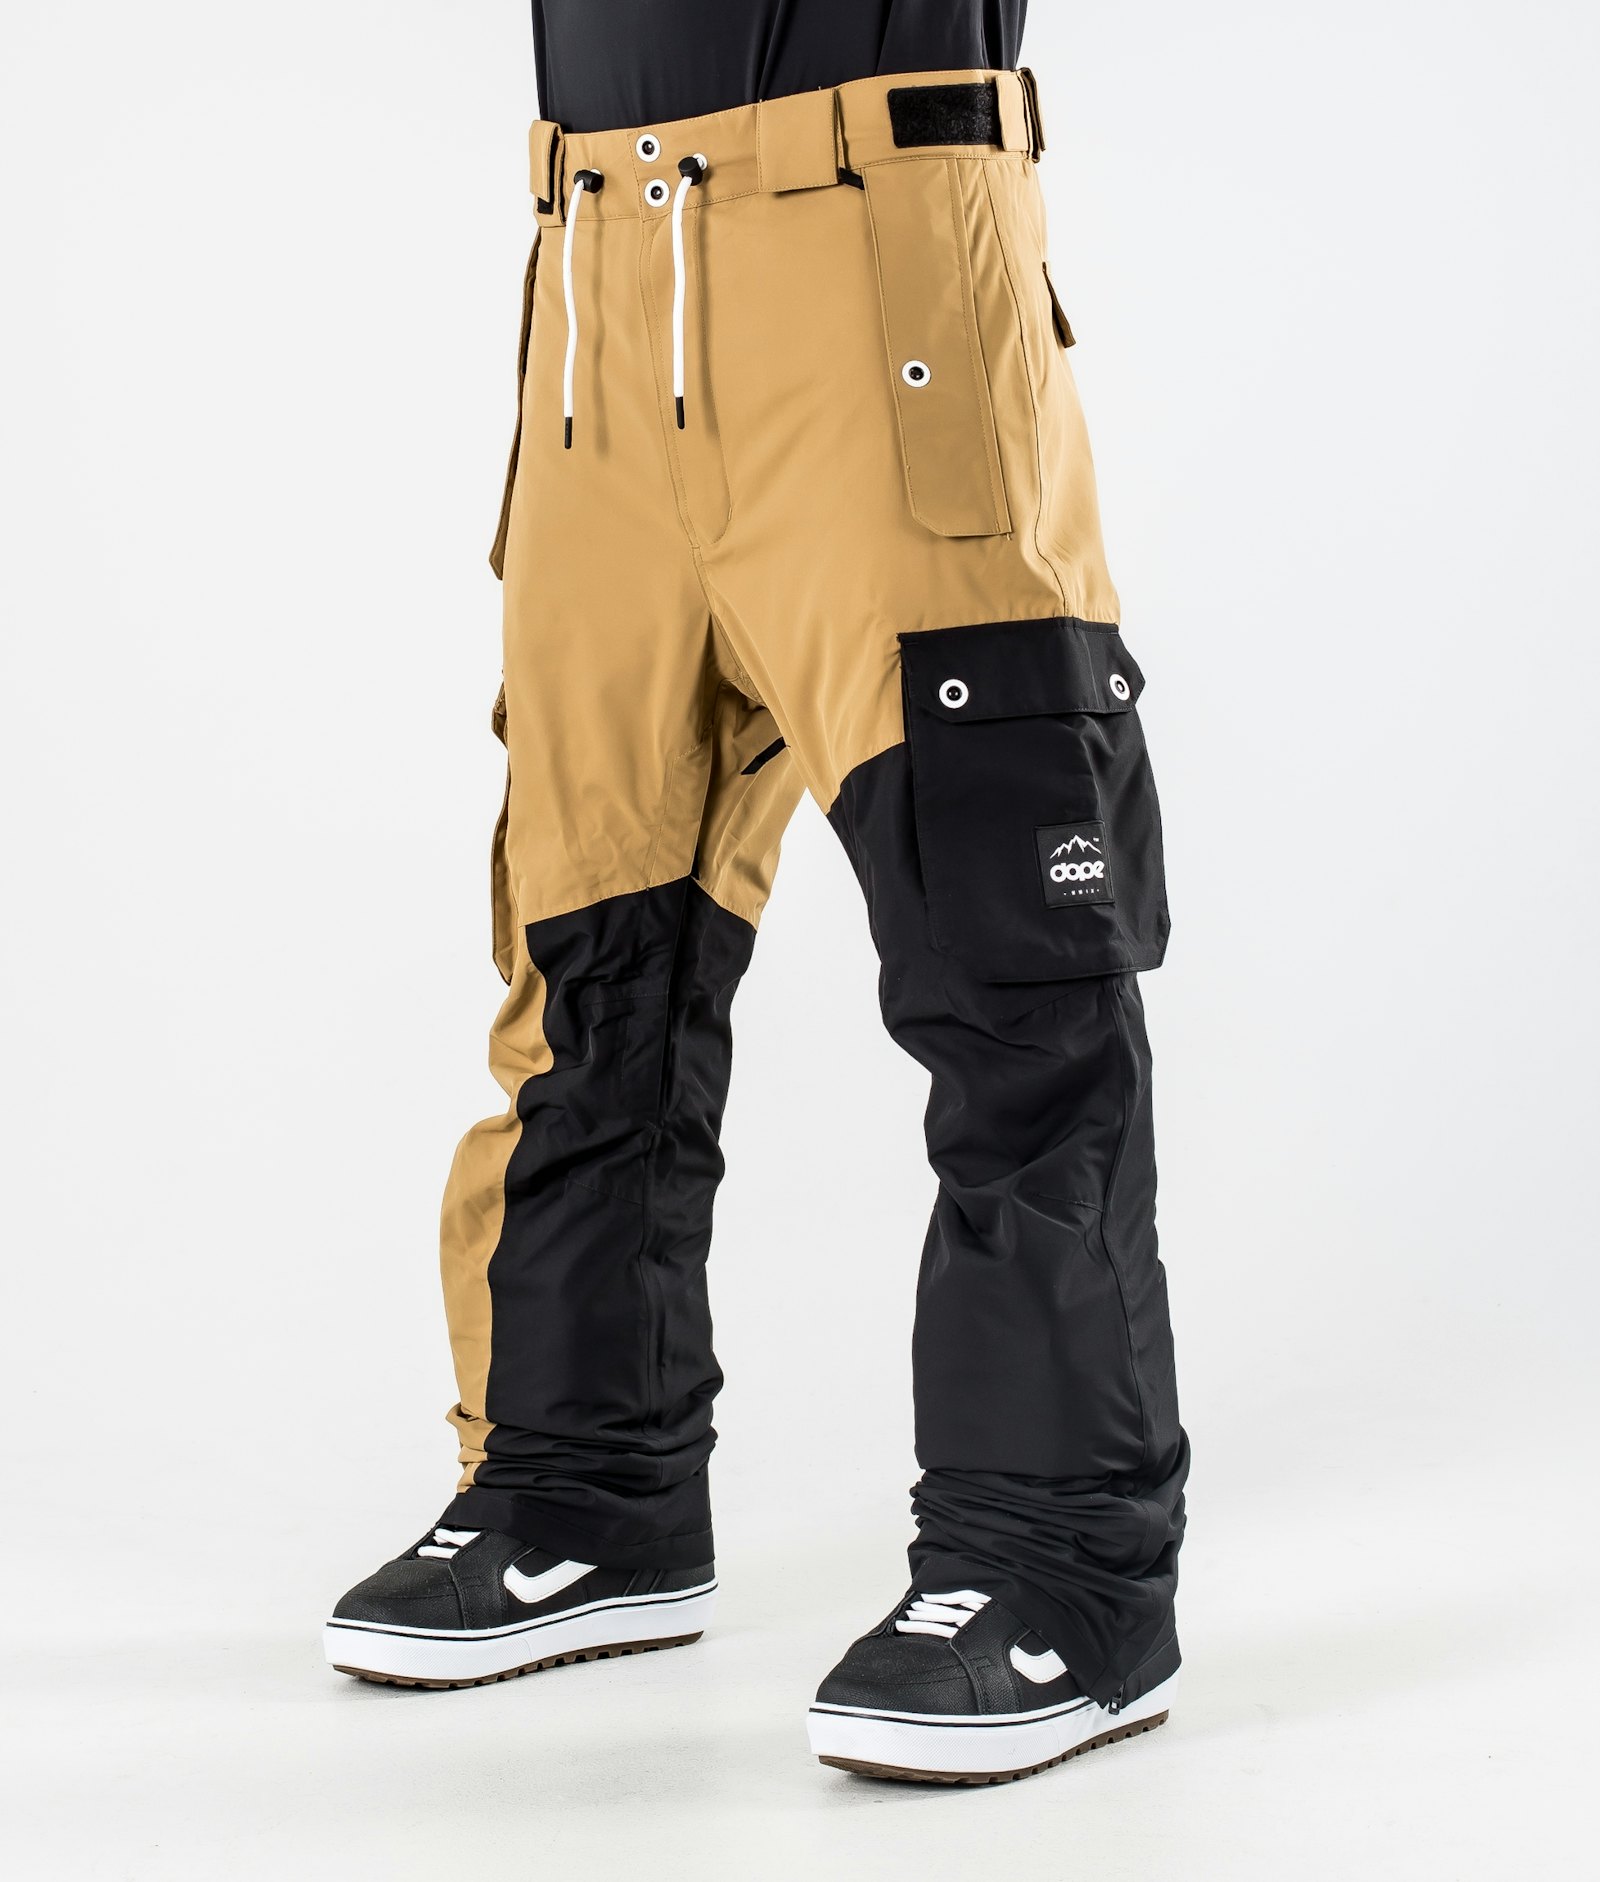 Dope Adept 2020 Snowboardhose Herren Gold/Black